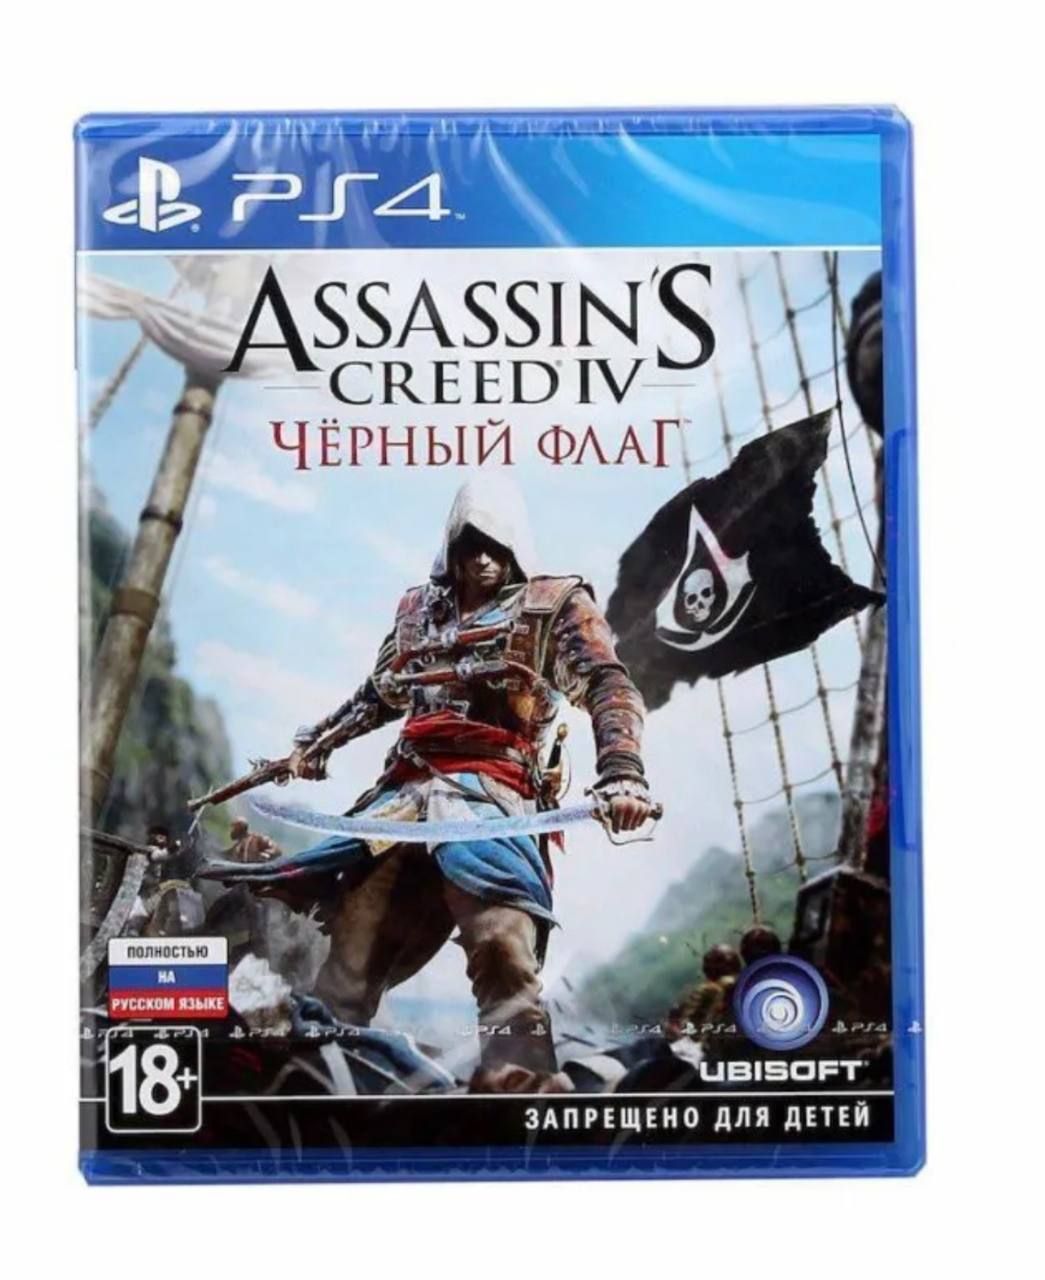 Игра assassins creed ps4. Assassin's Creed черный флаг ps4 диск. Ассасин Крид диск на ПС 4. Ассасин Крид 4 ПС 4. Assassin's Creed IV : черный флаг ps4.